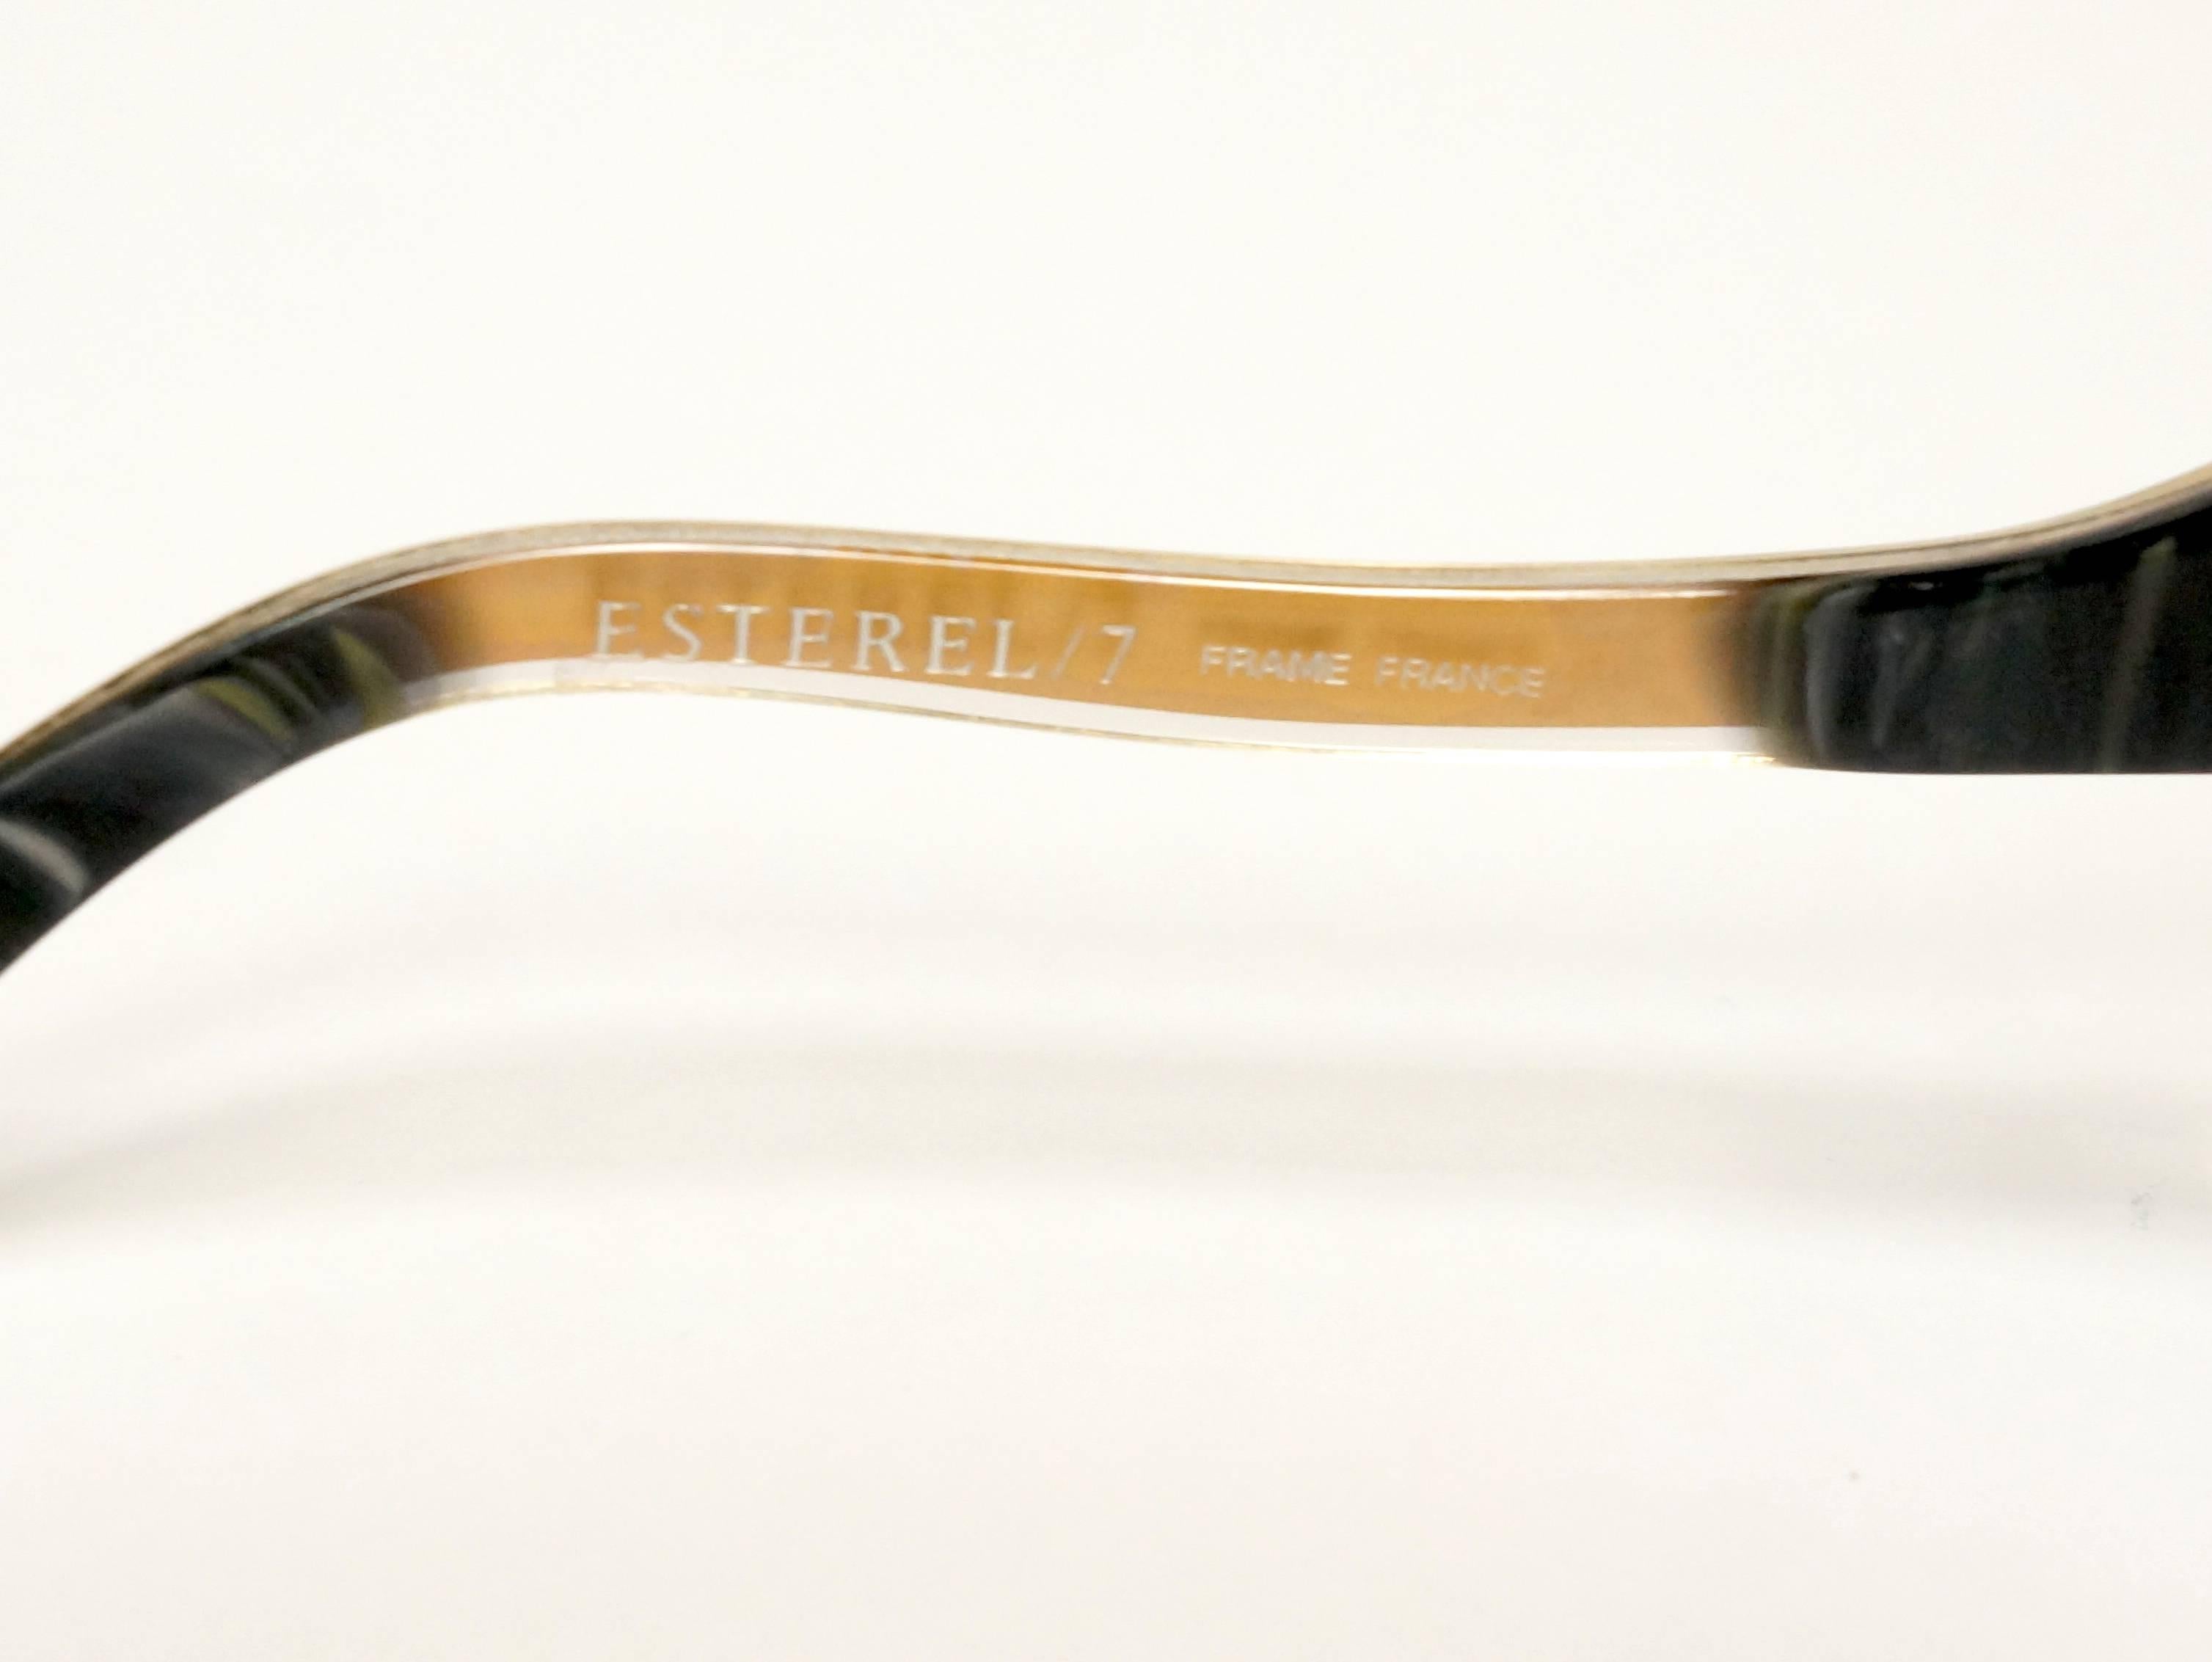 70s French Vintage Sunglasses by Jacques Fath - model Esterel/7  For Sale 3